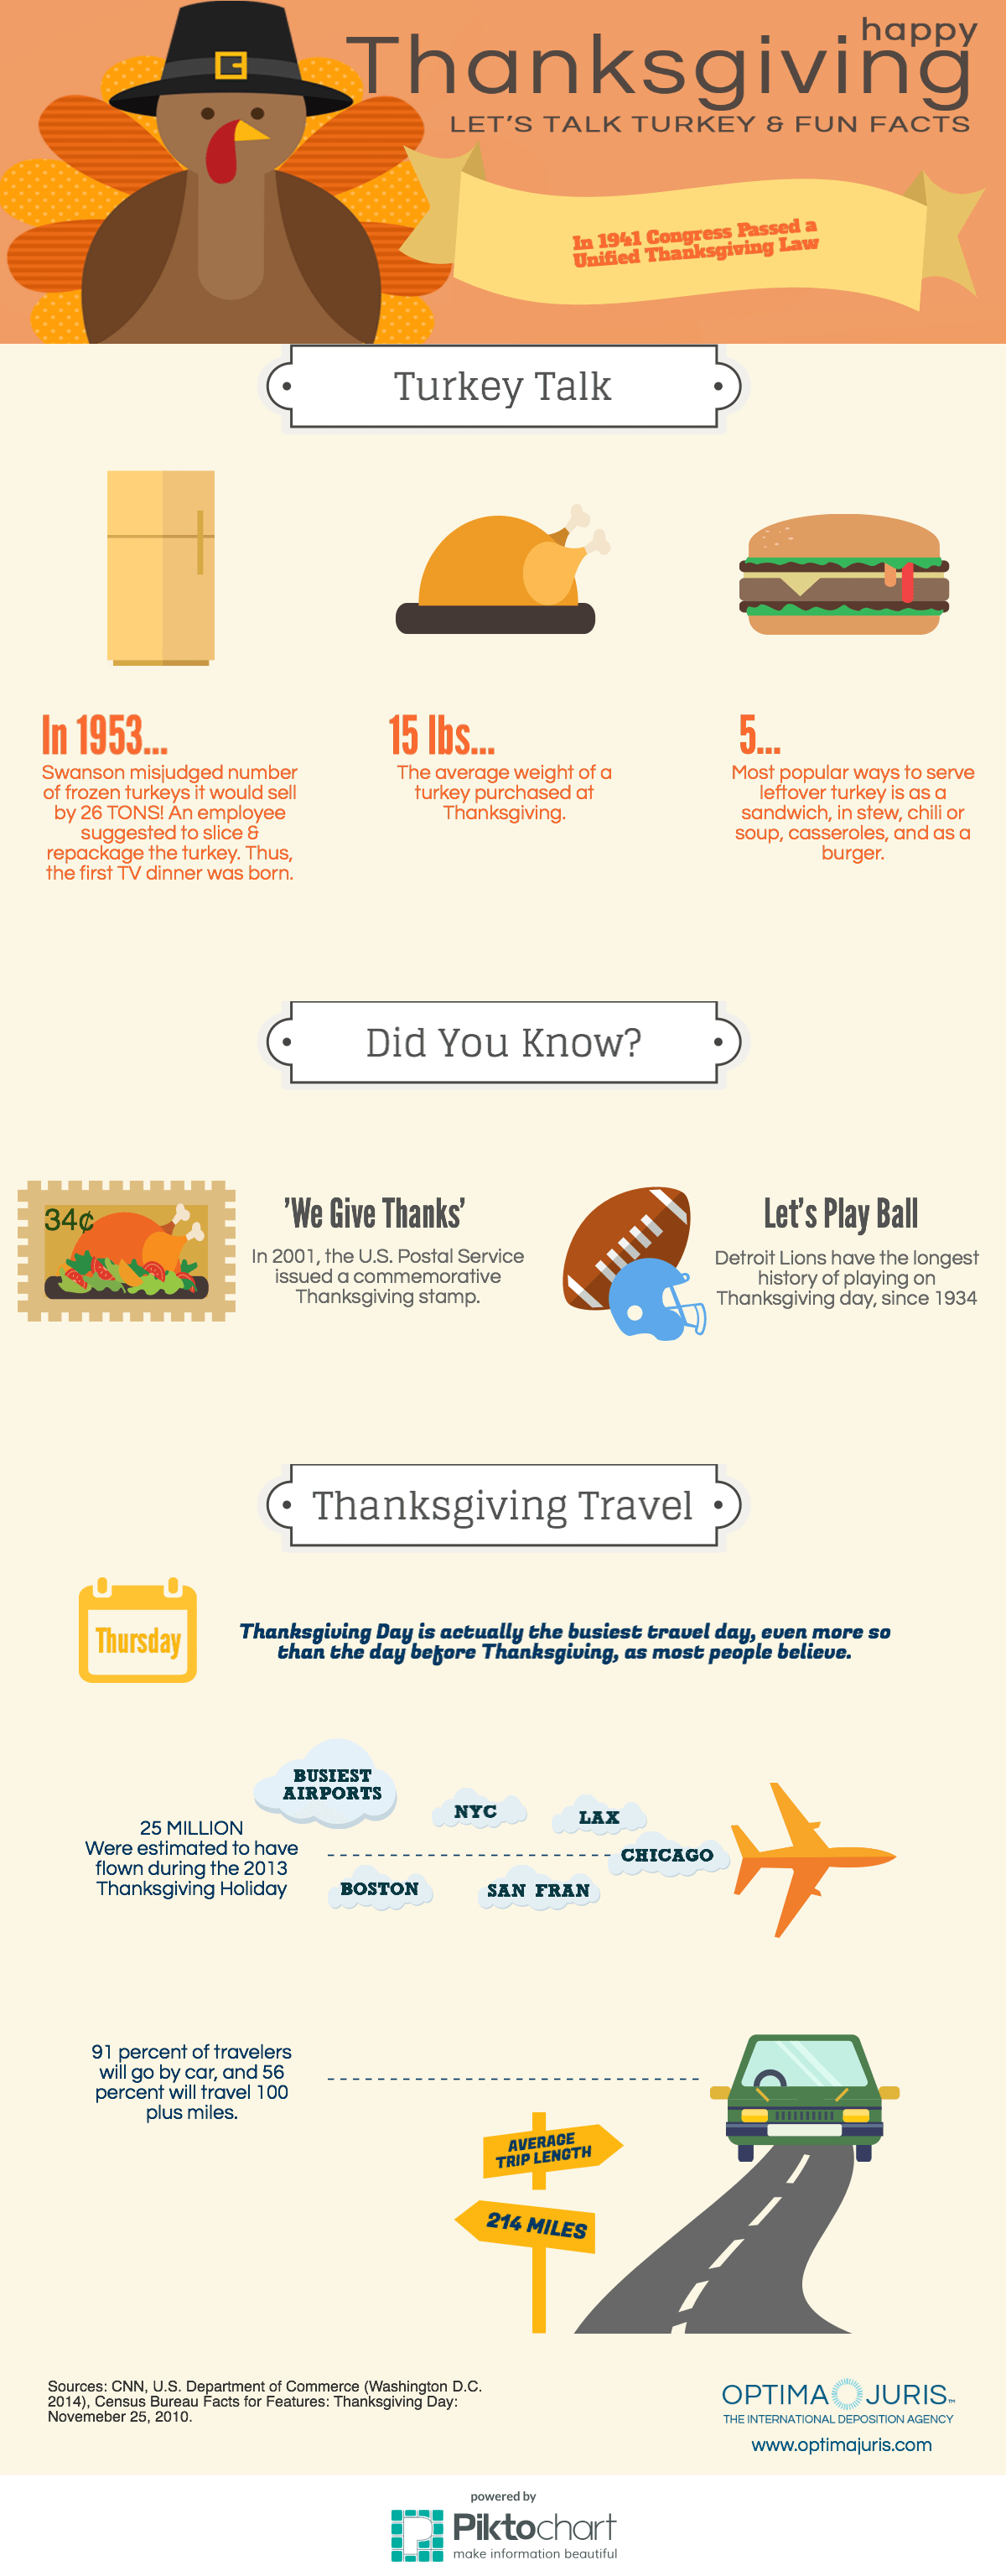 Optima Juris: Thanksgiving Facts Infographic